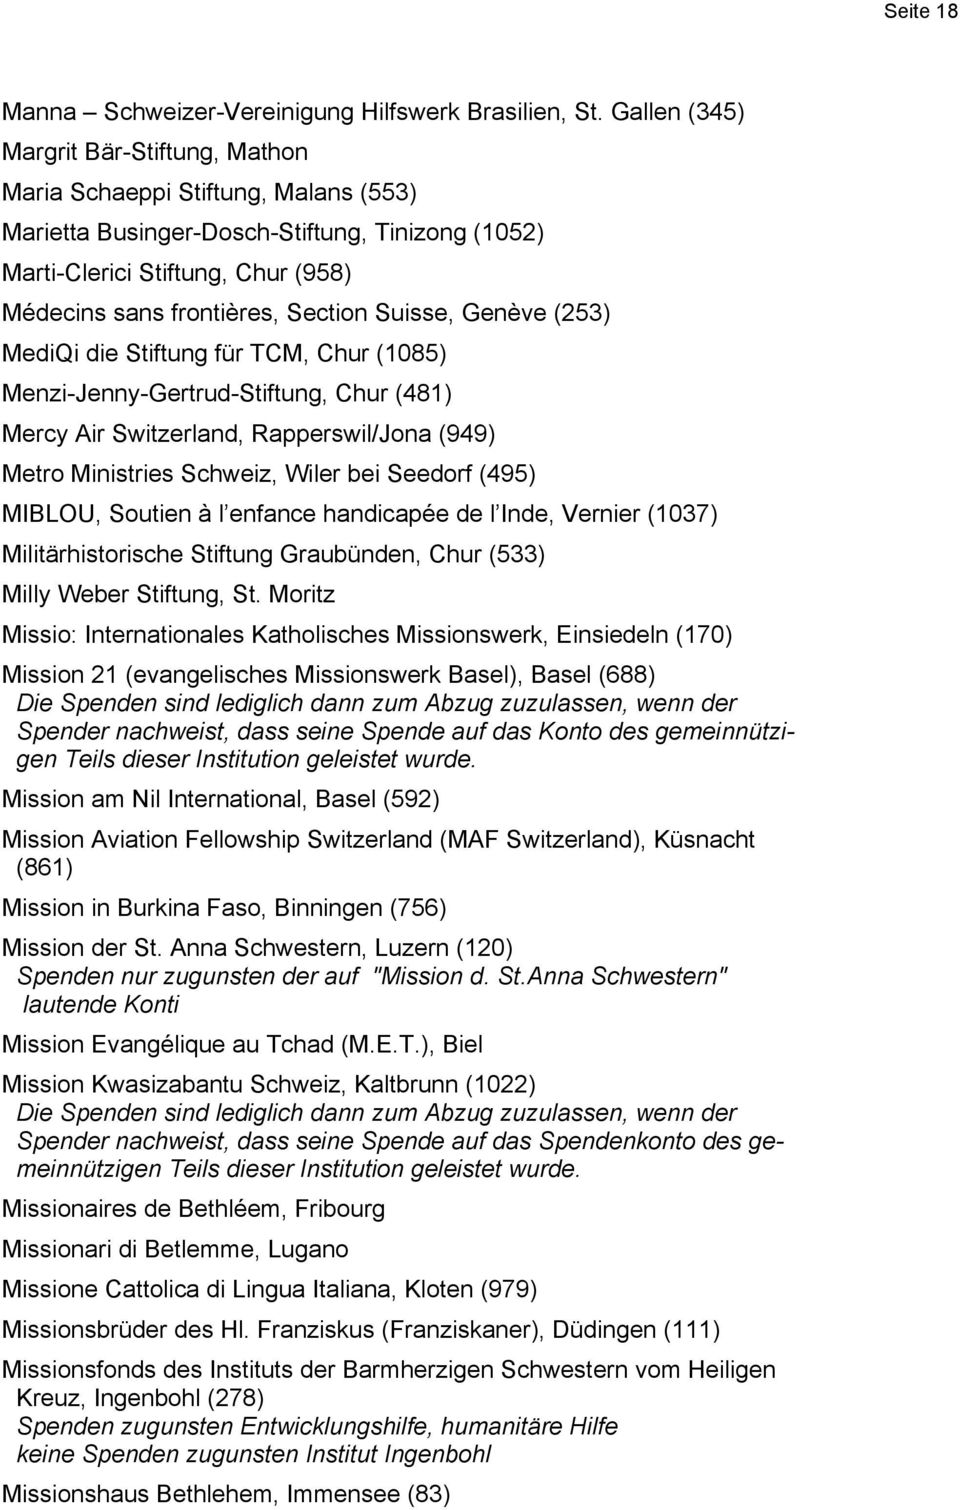 Suisse, Genève (253) MediQi die Stiftung für TCM, Chur (1085) Menzi-Jenny-Gertrud-Stiftung, Chur (481) Mercy Air Switzerland, Rapperswil/Jona (949) Metro Ministries Schweiz, Wiler bei Seedorf (495)